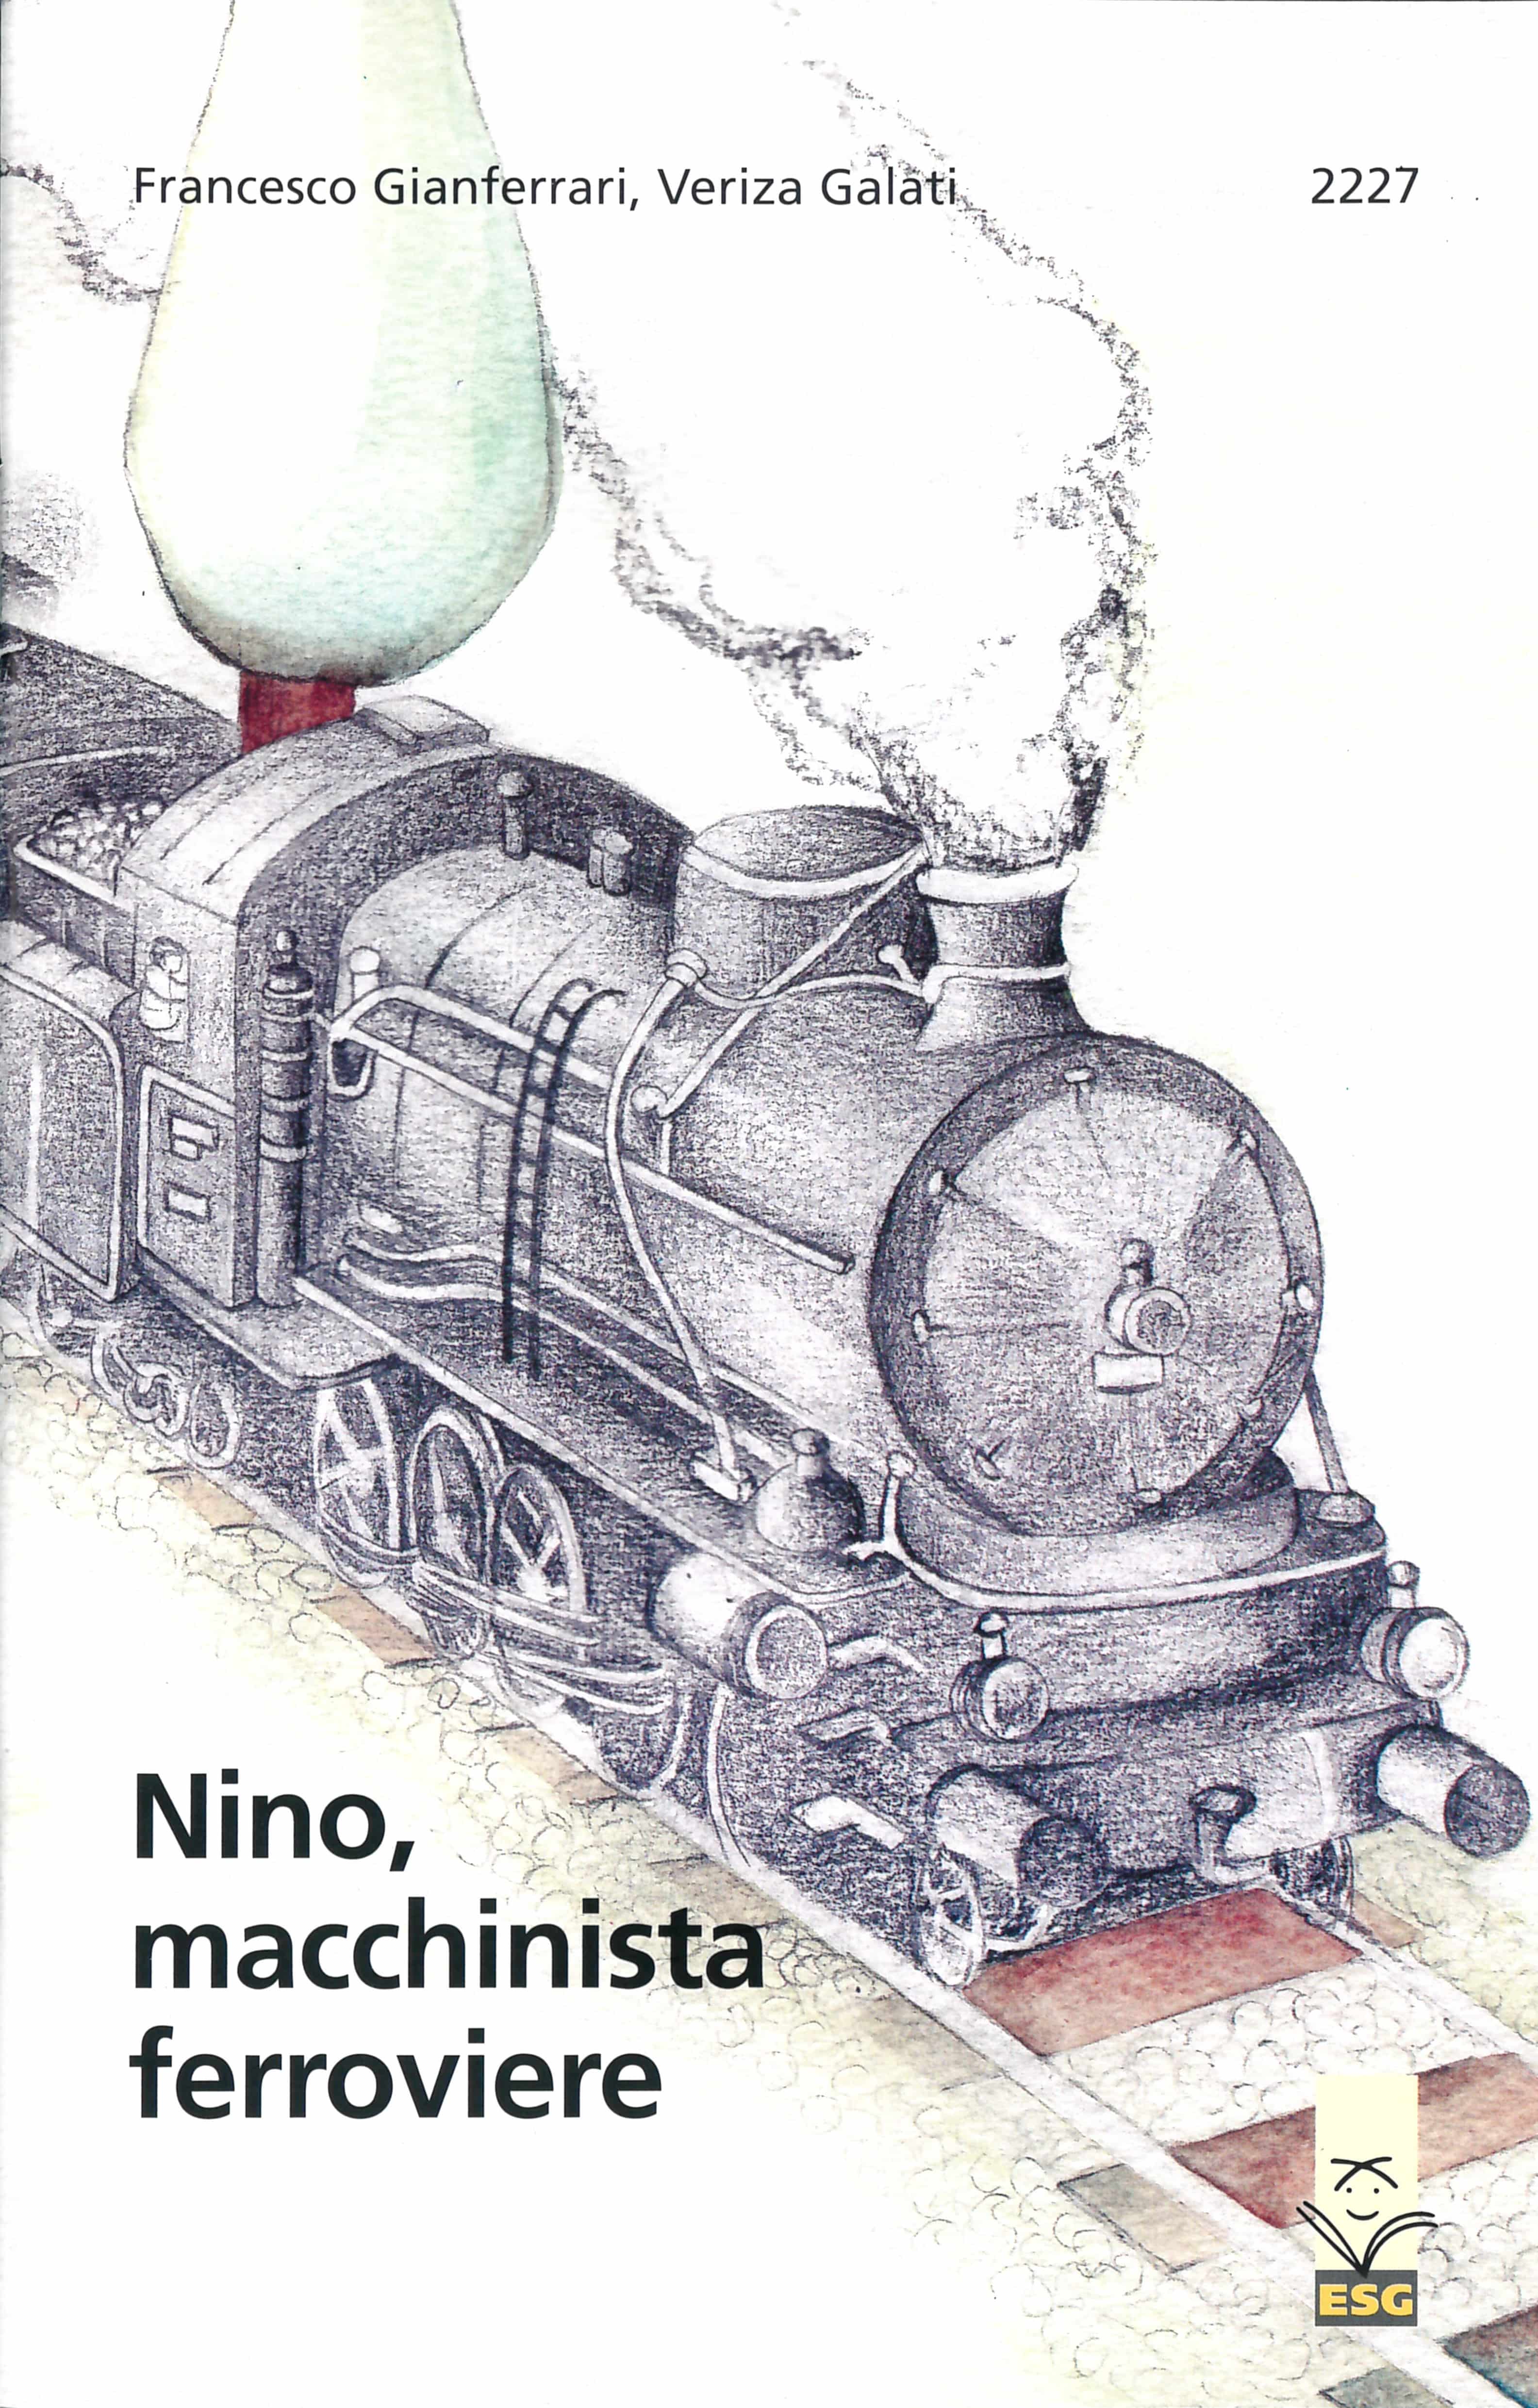 Nino, macchinista ferroviere